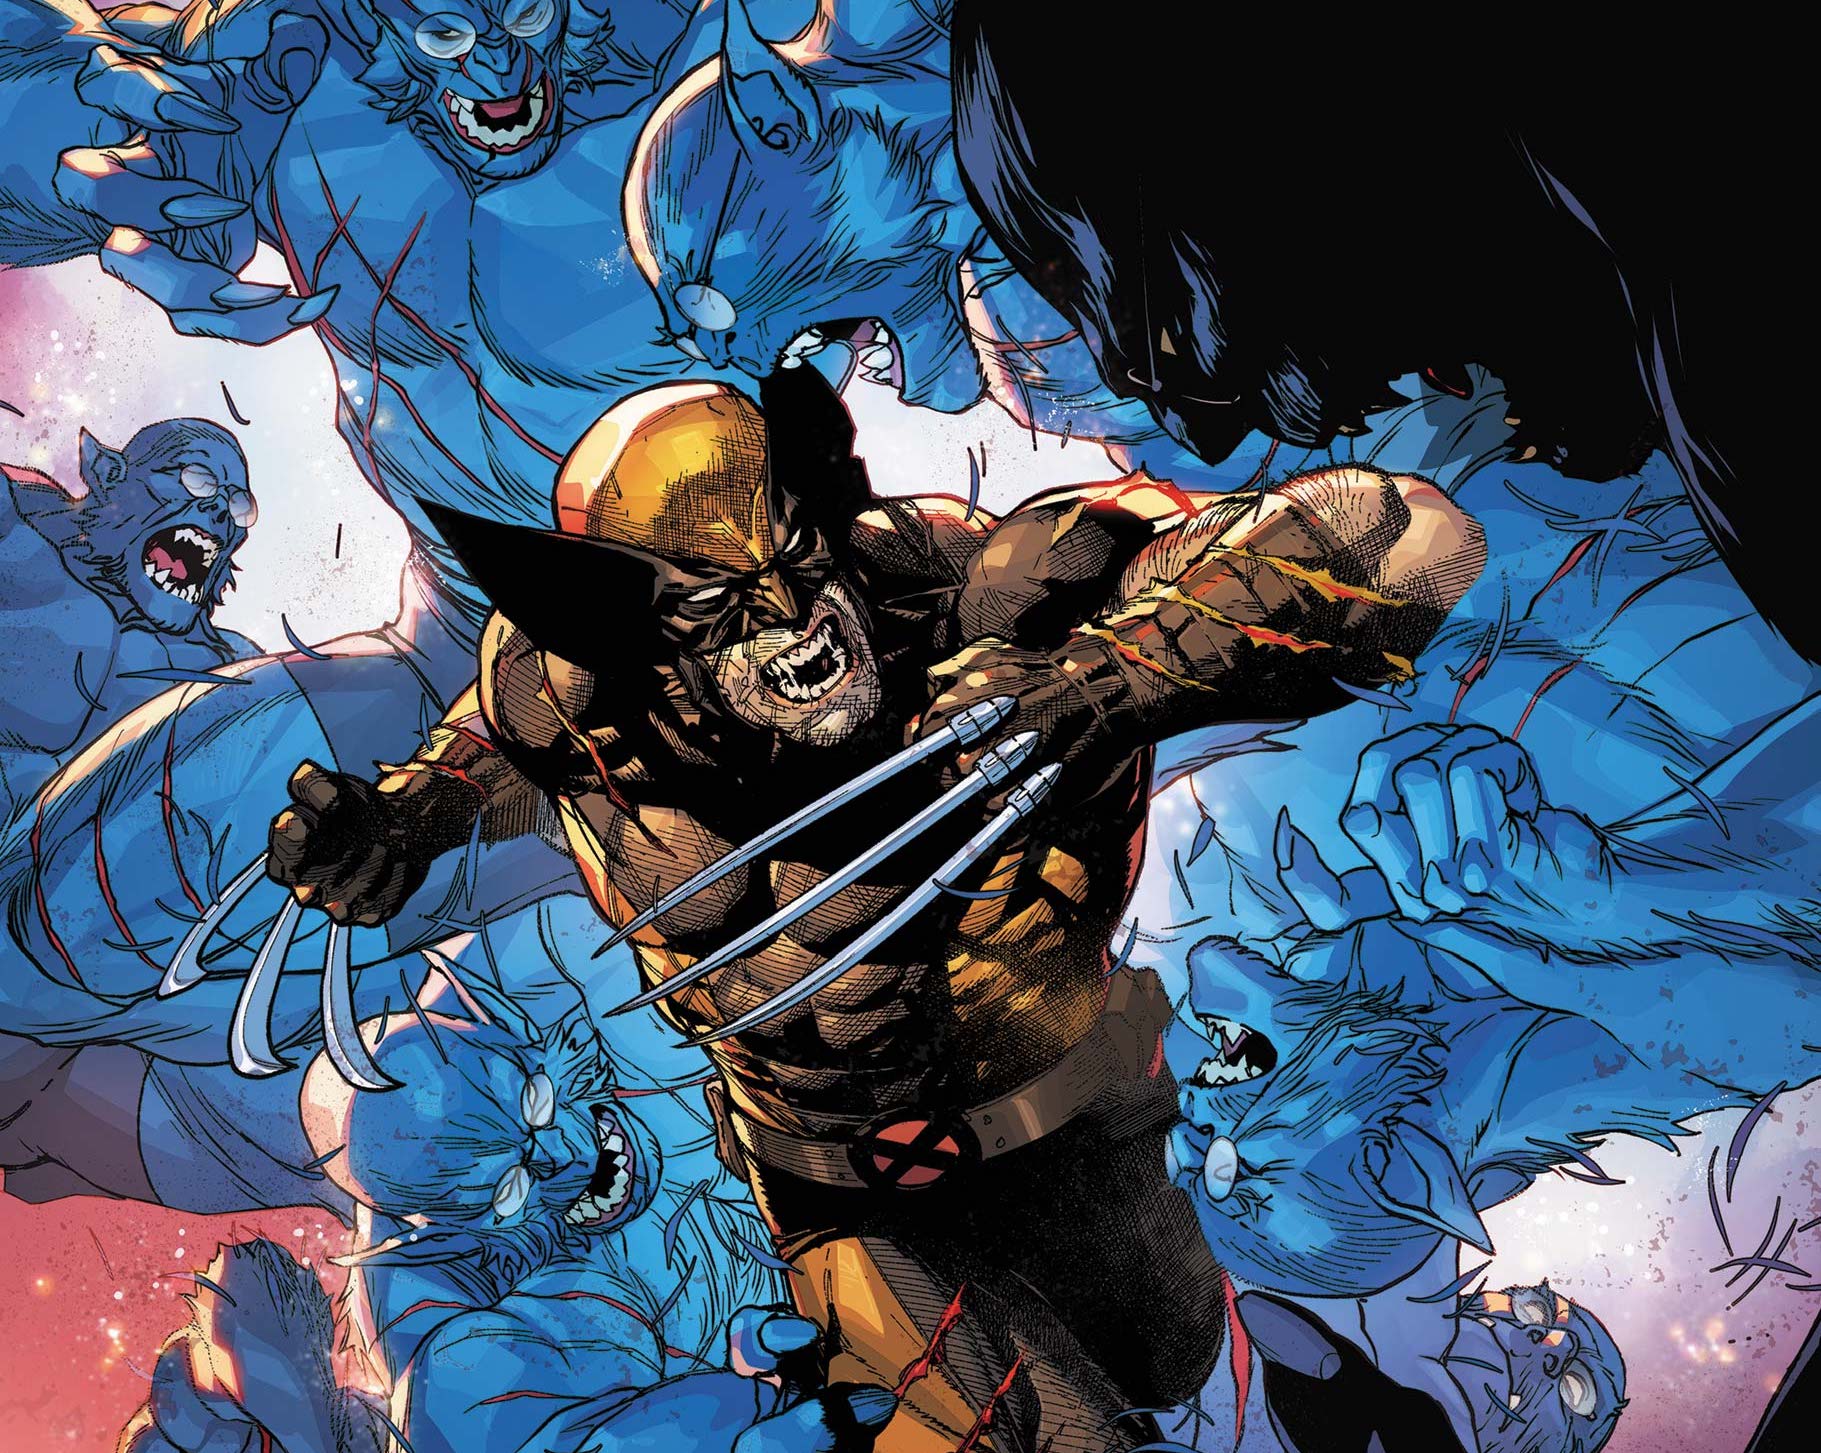 'Wolverine' #31 sets up an evil Beast throwdown